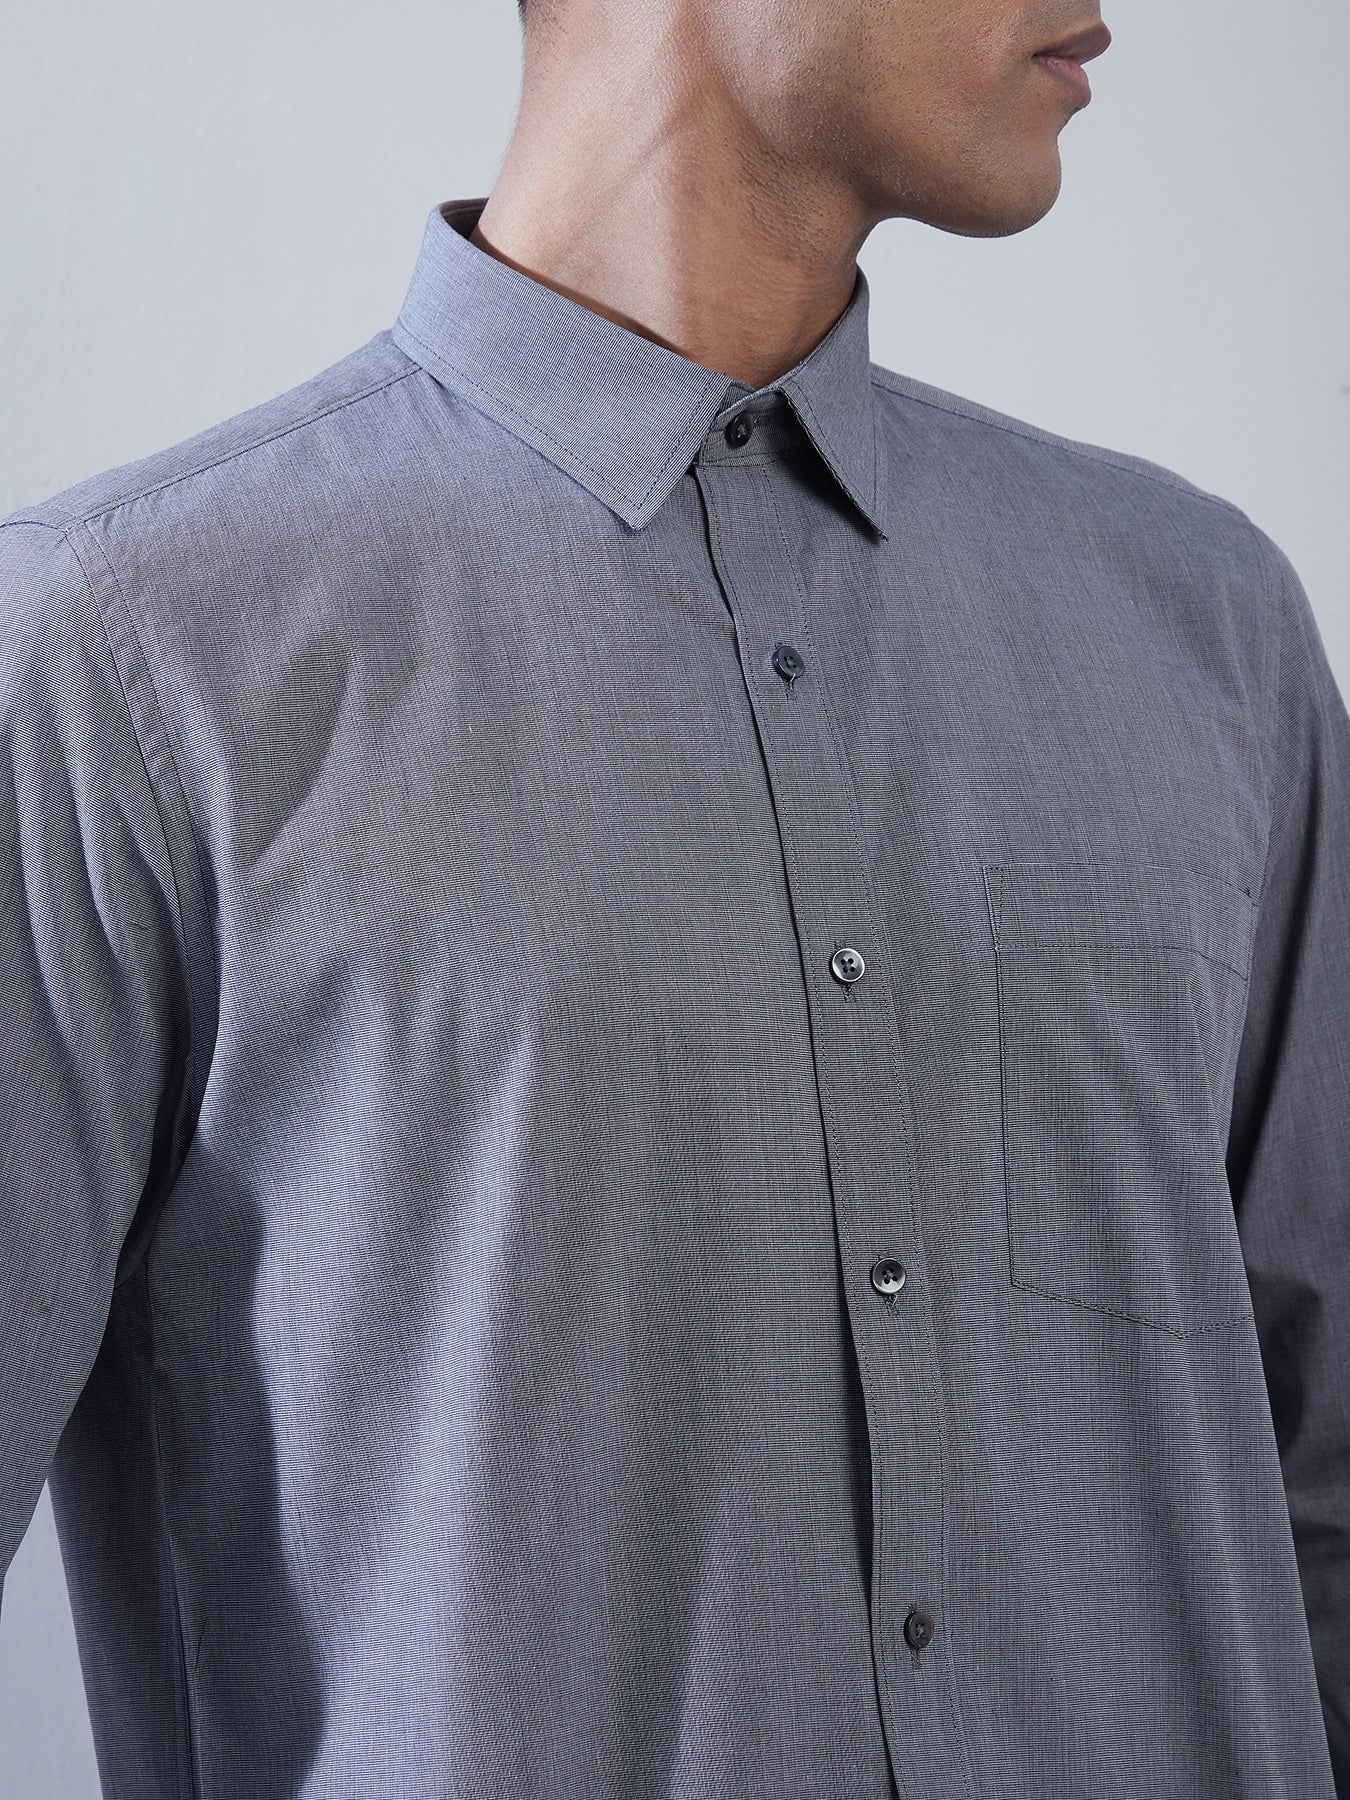 100% Cotton Grey Plain Slim Fit Full Sleeve Formal Shirt